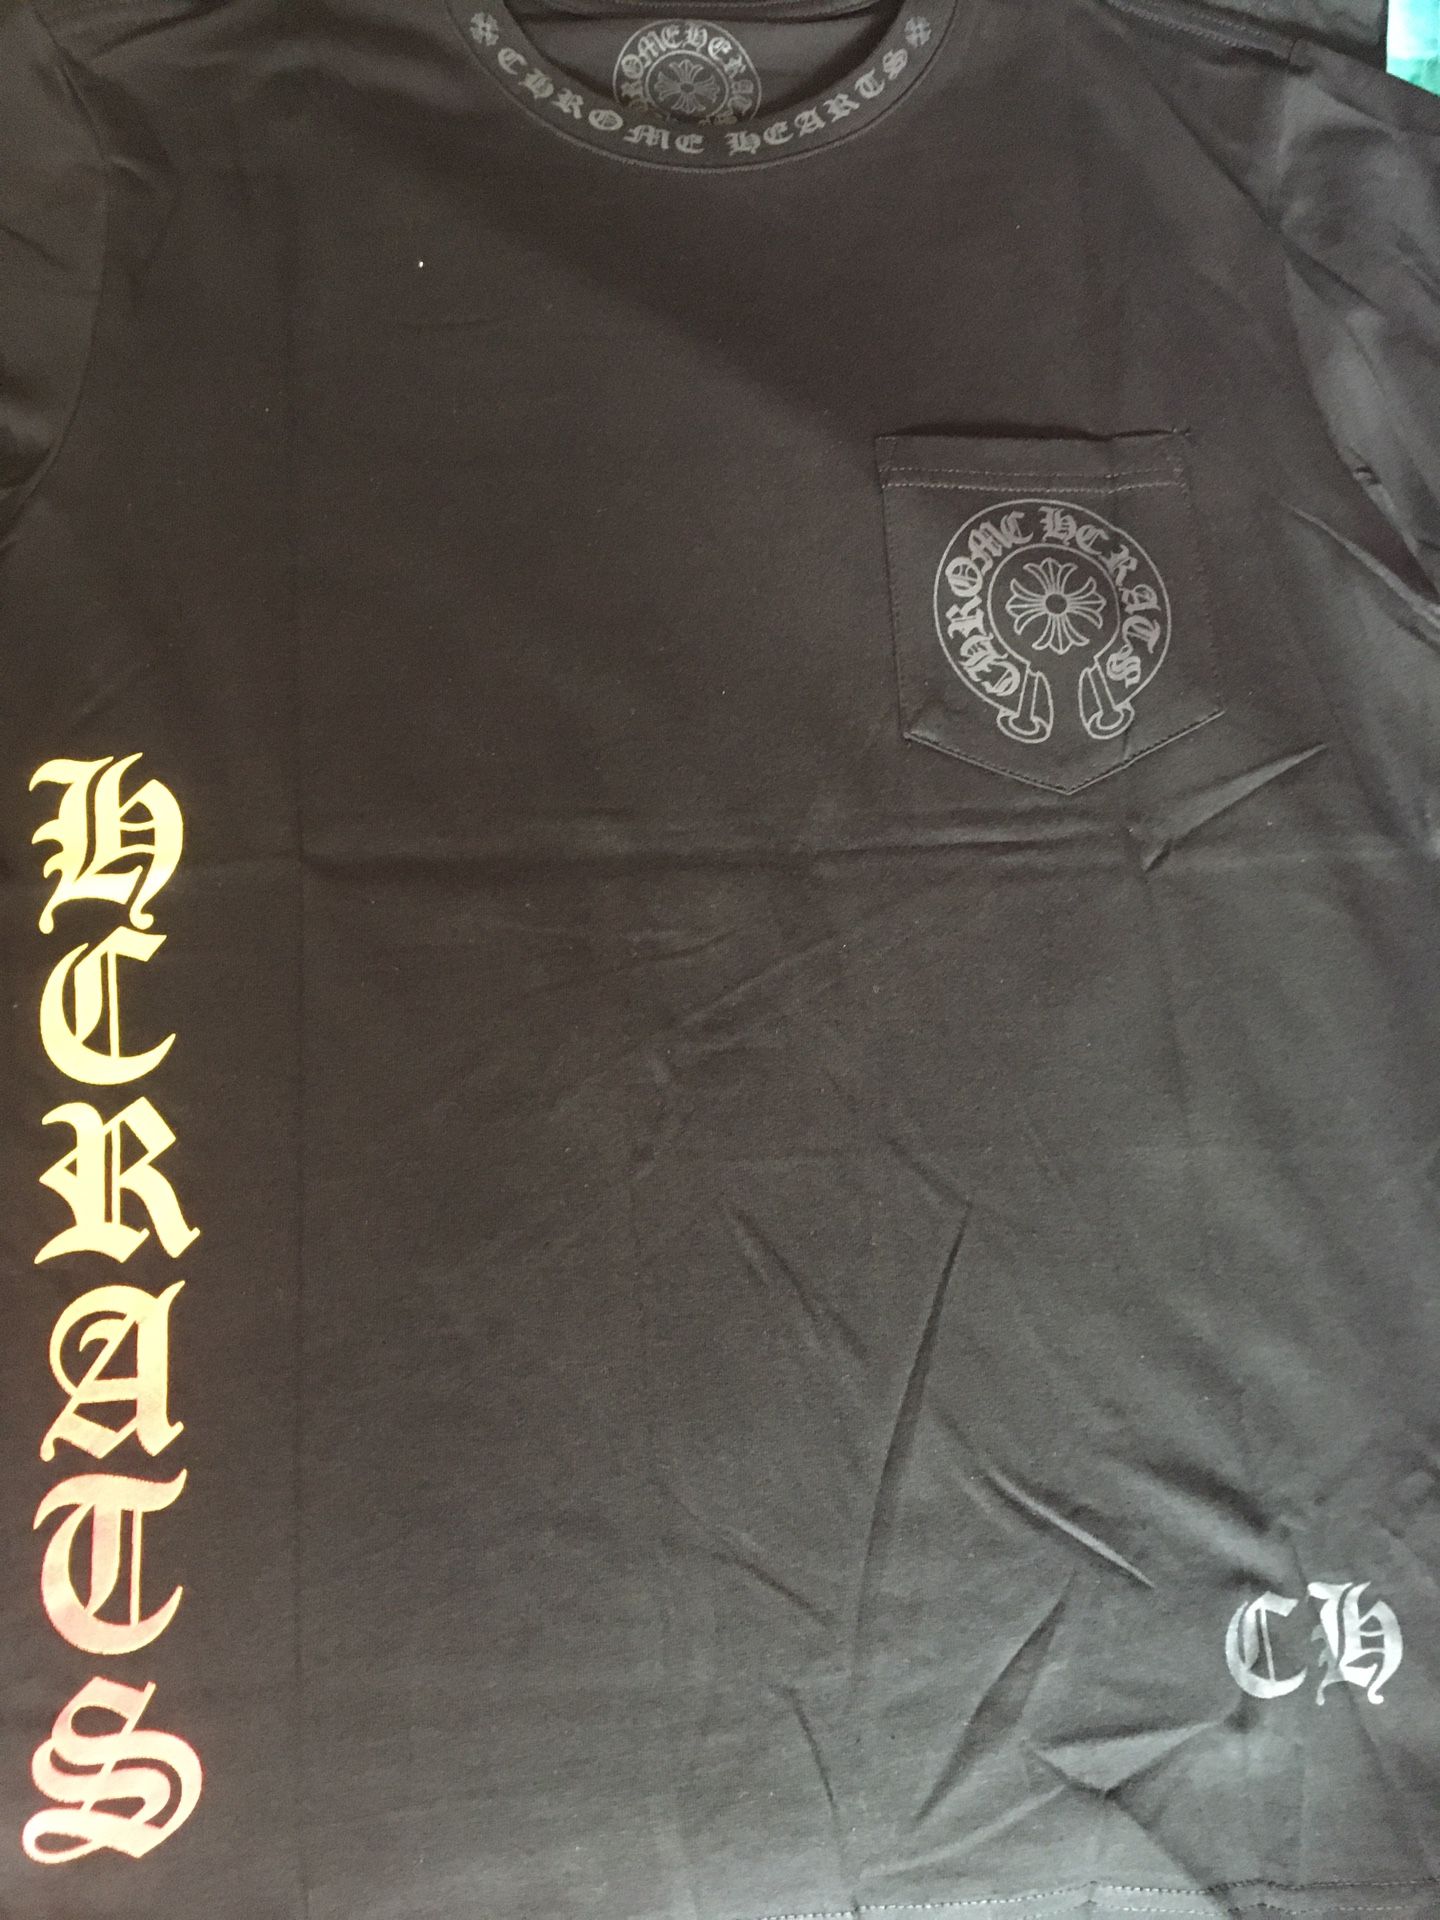 Chrome Hearts “Las Vegas Exclusive” Long Sleeve T-Shirt for Sale in Hazel  Crest, IL - OfferUp